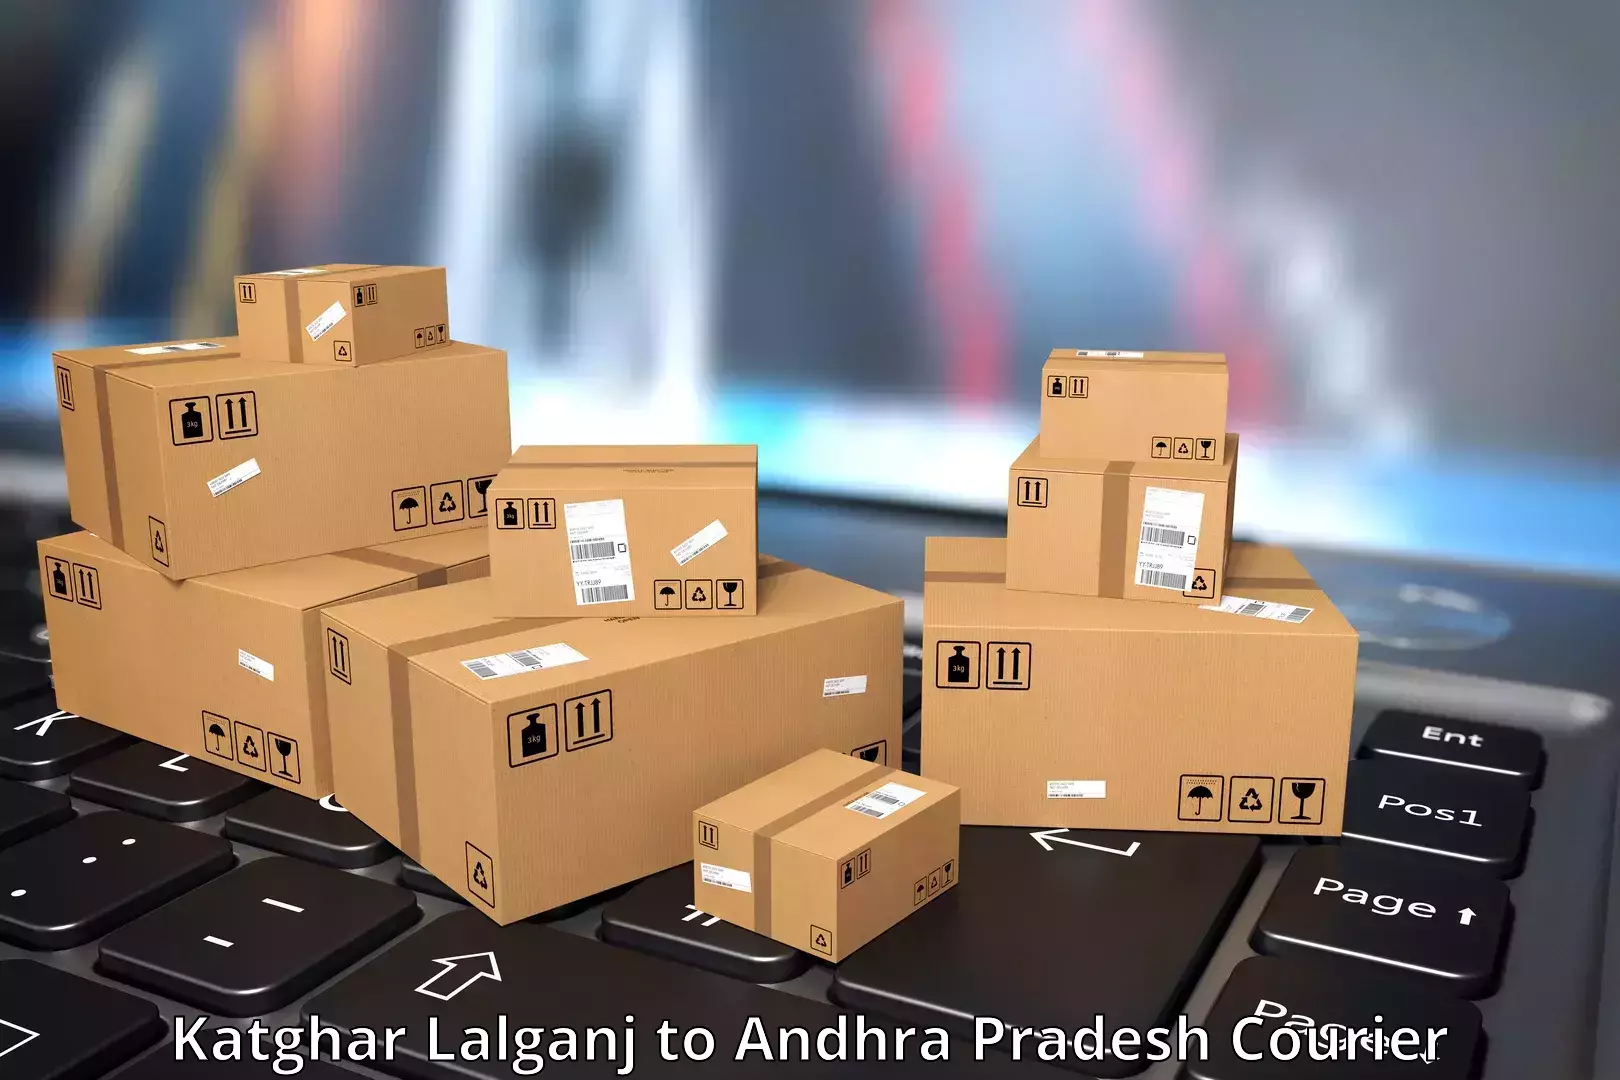 Express package handling Katghar Lalganj to Vijayawada